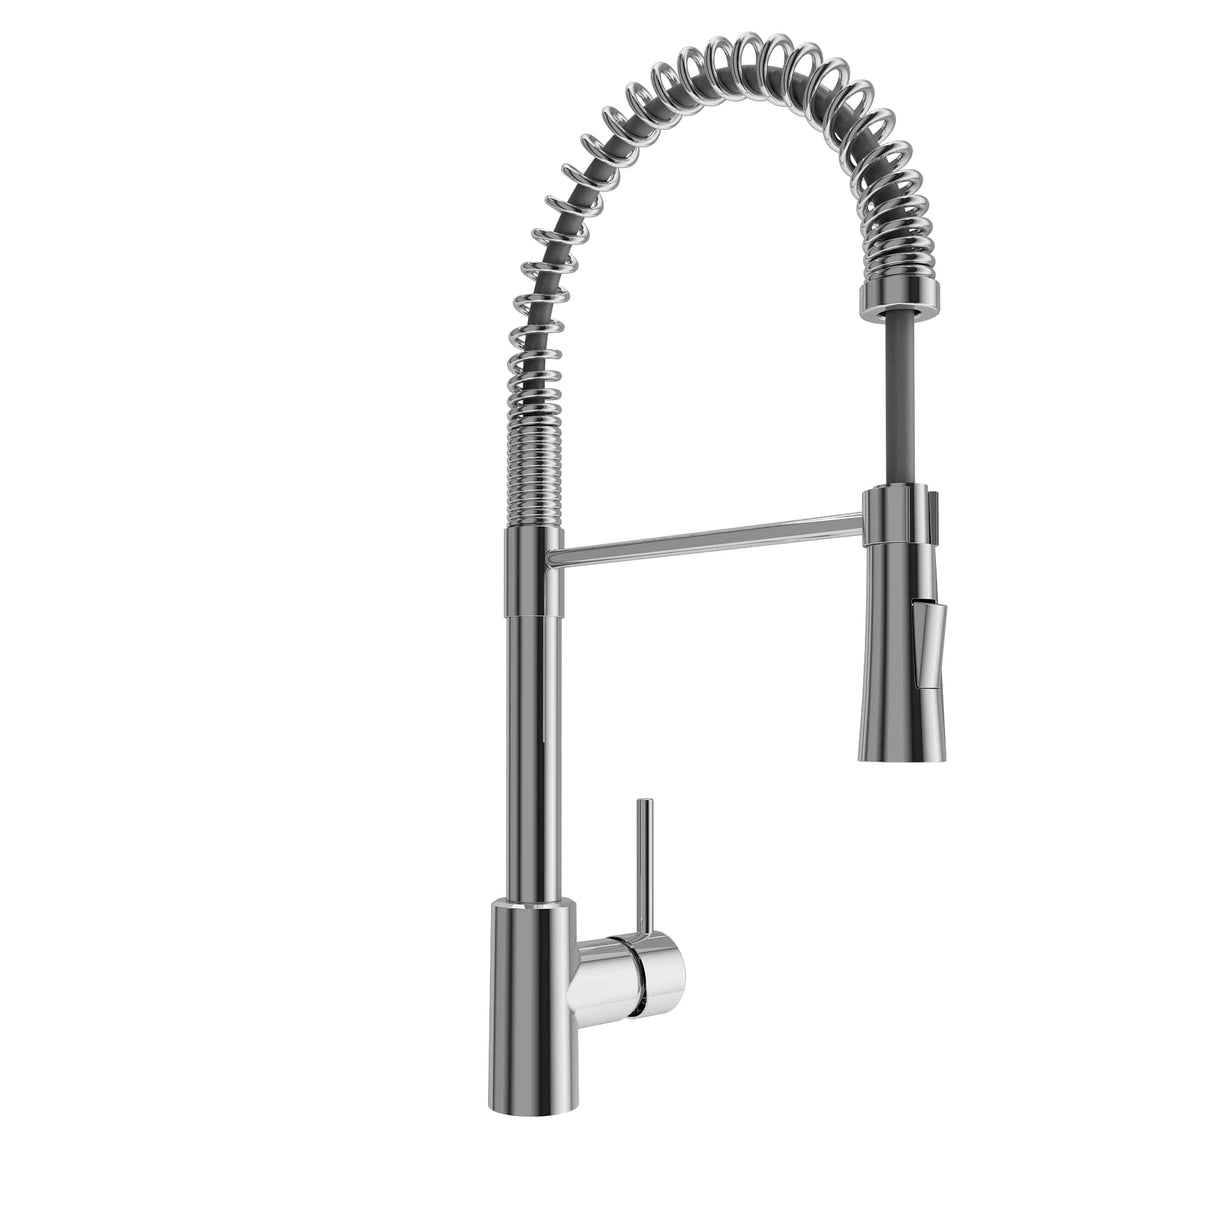 BOCCHI 2020 0001 CH Livenza 2.0 Pull-Down Kitchen Faucet in Chrome